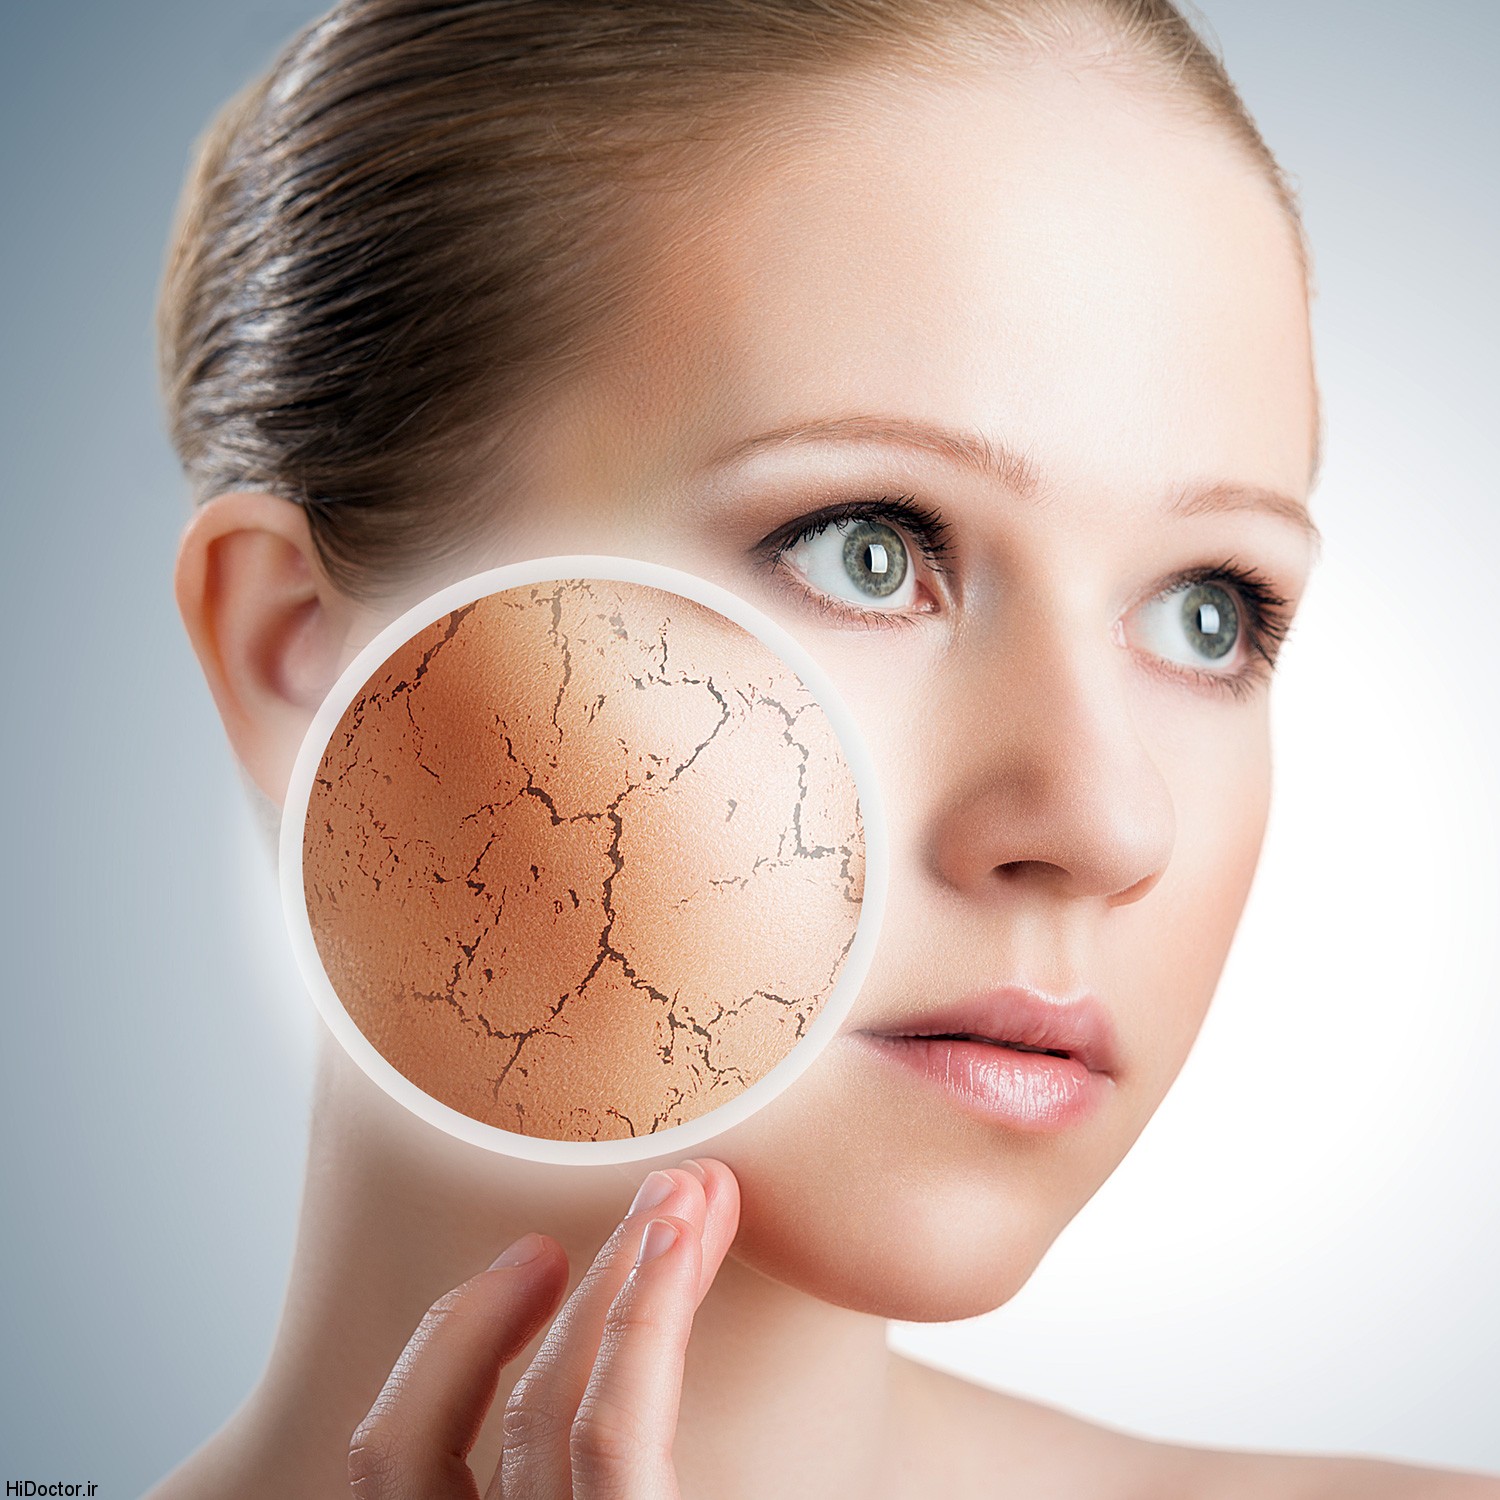 dry skin face کم آبی بدن علت اصلی خشکی پوست نیست